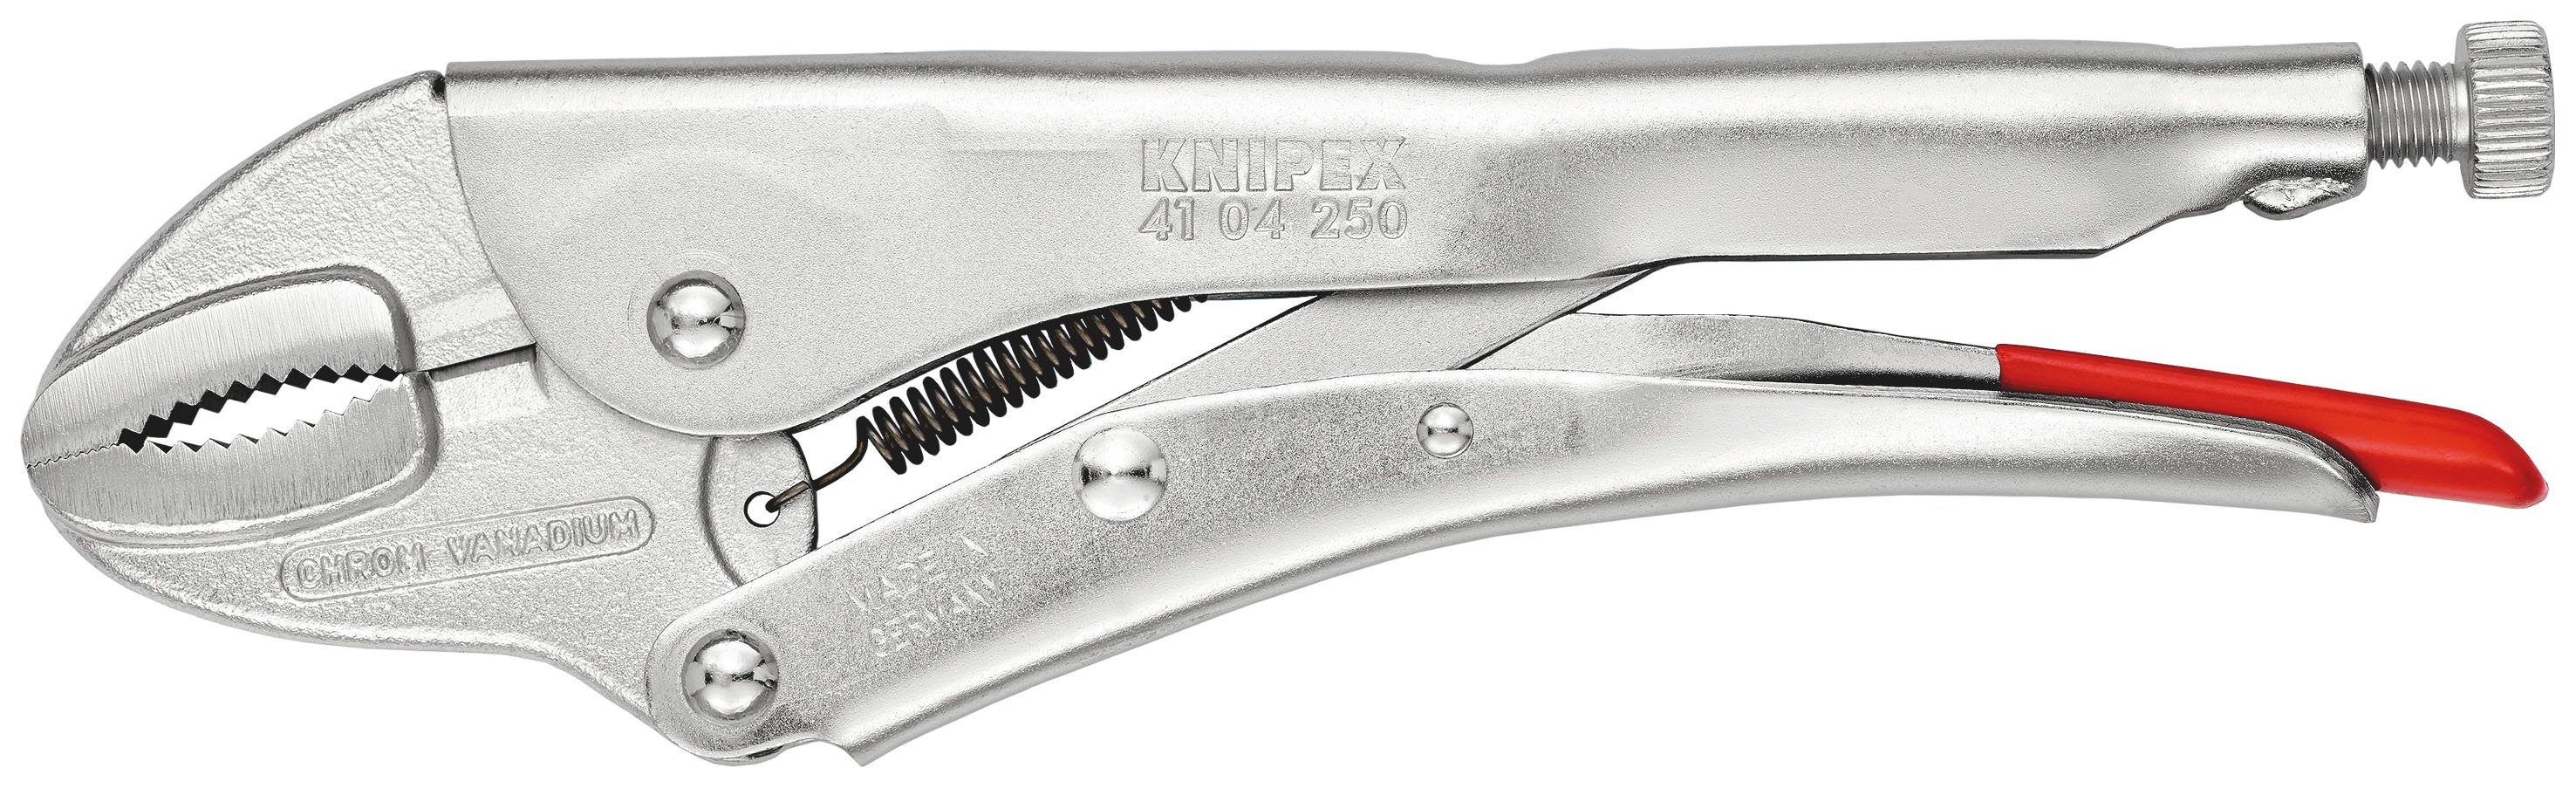 Knipex Gripzange 41 04 250 verzinkt 1-tlg., EAN, 250 mm